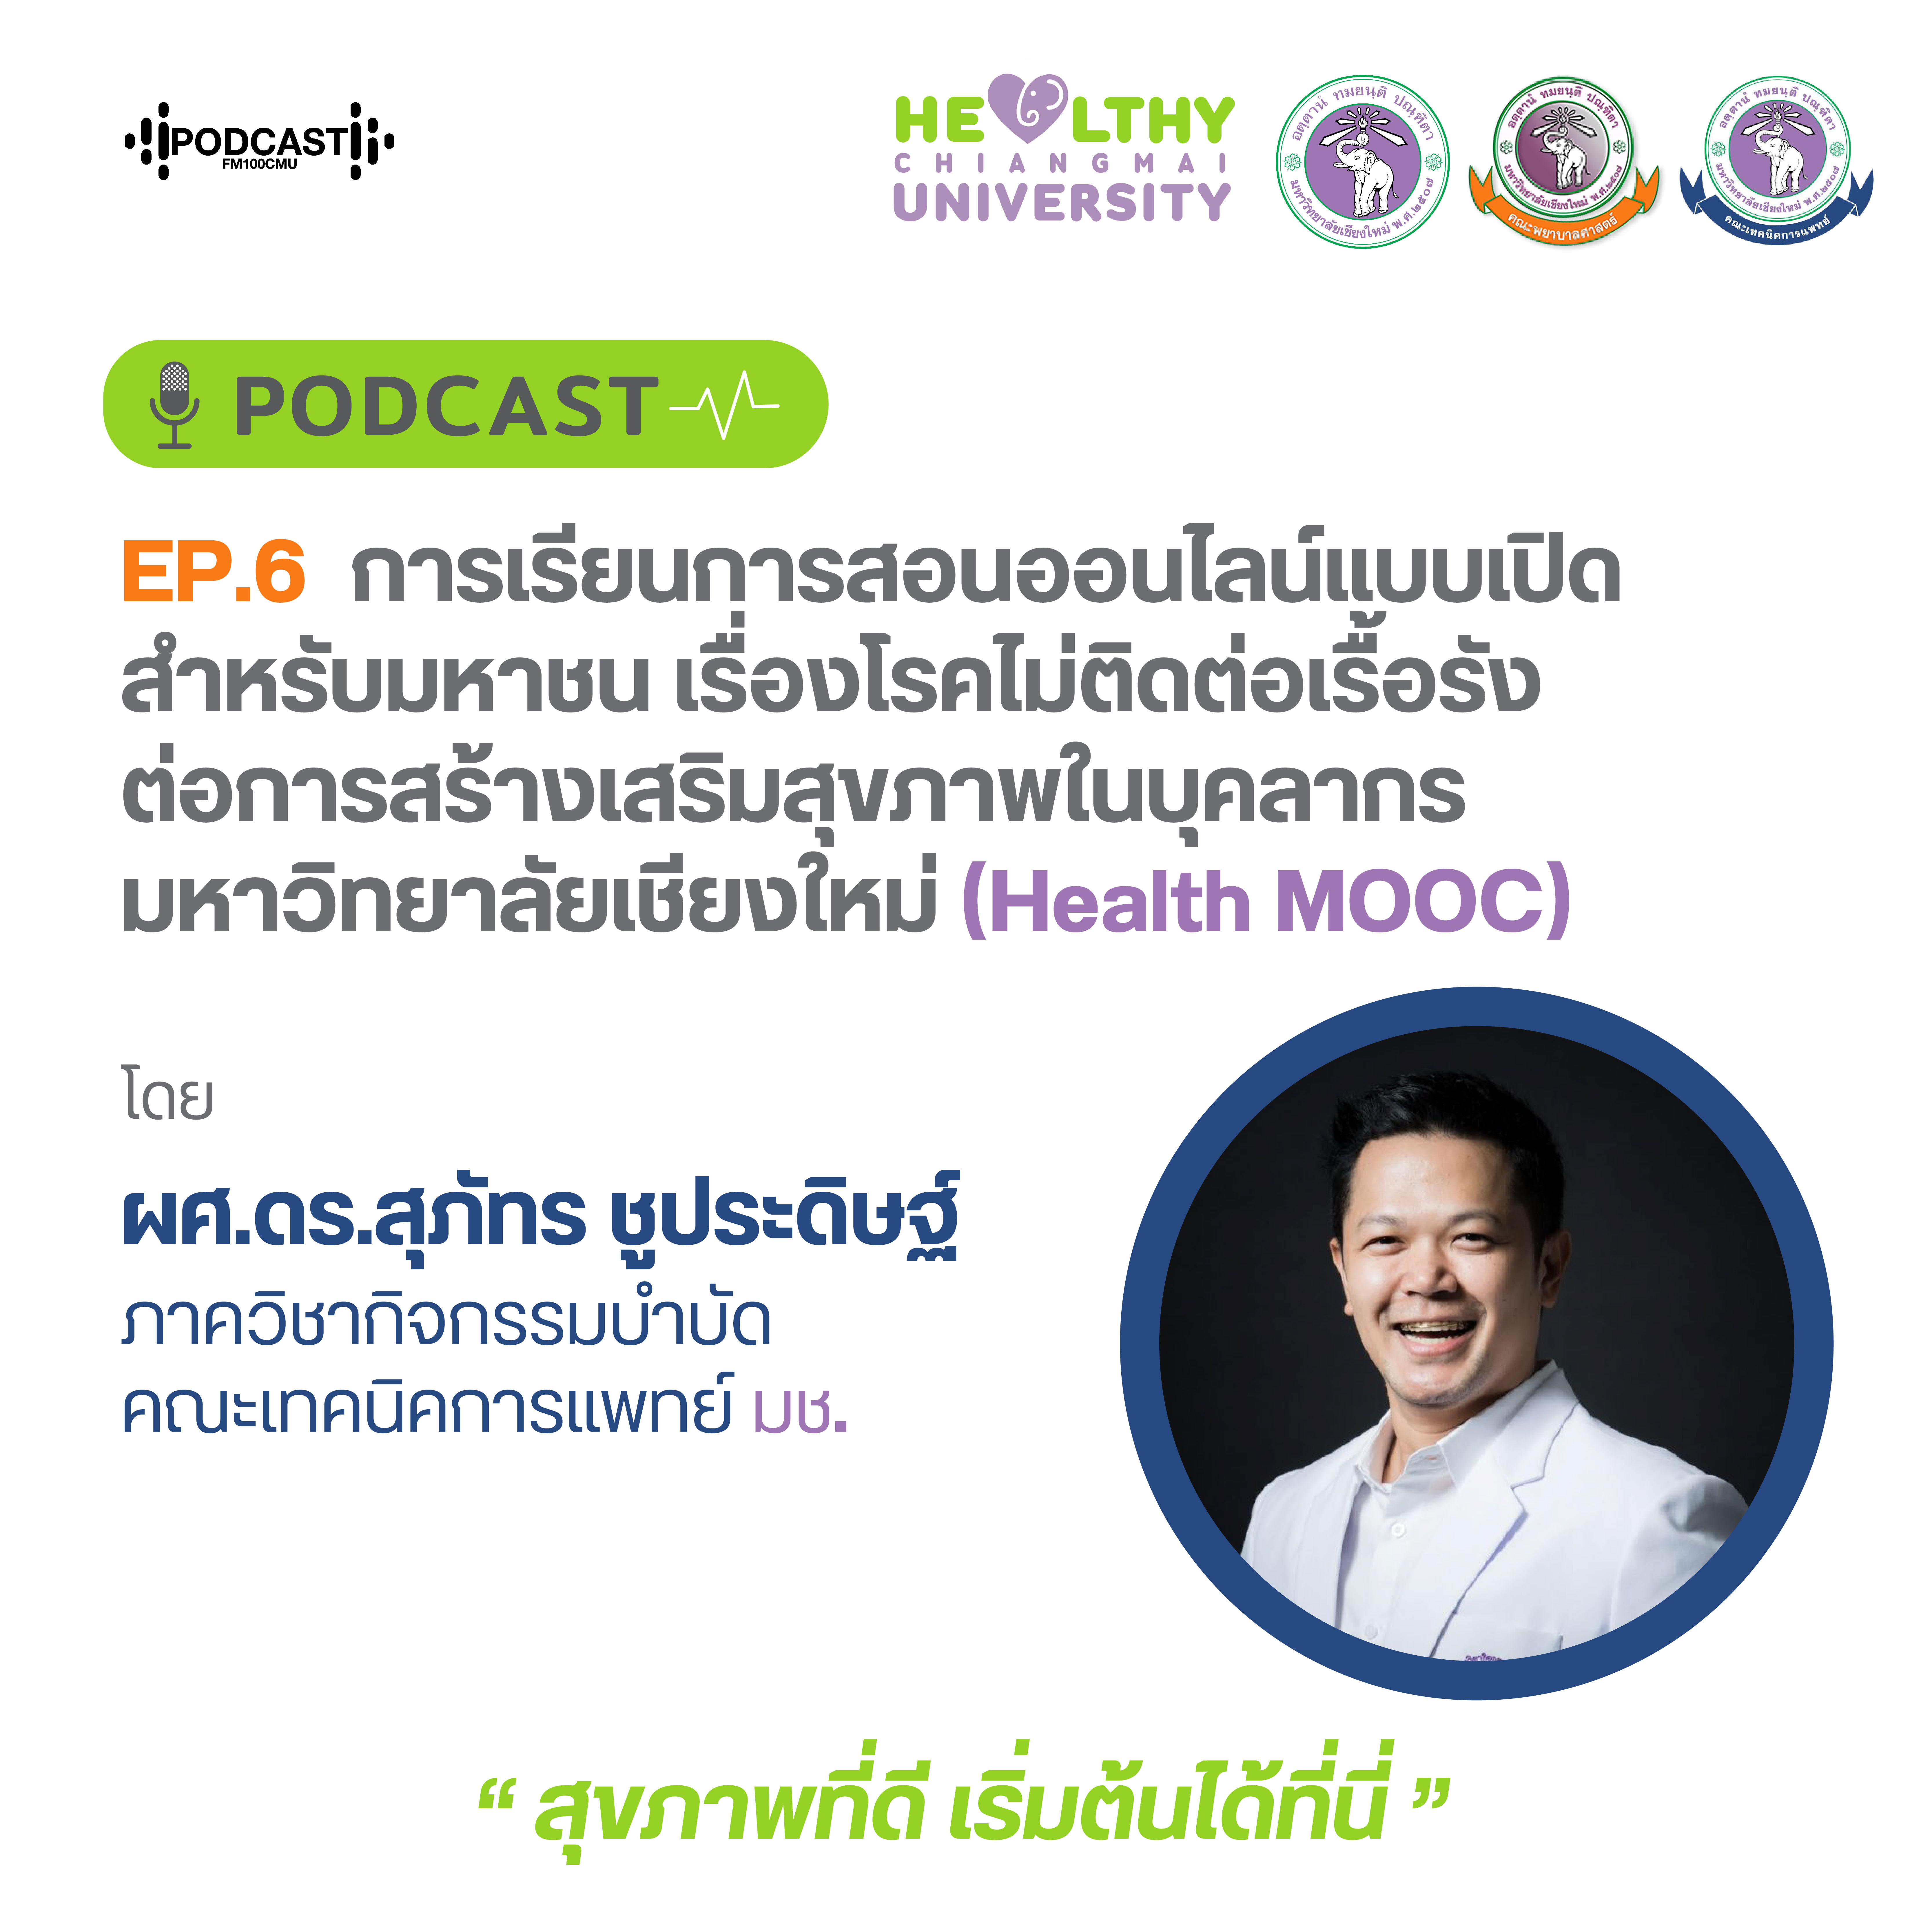 Podcast Healthy CMU Ep.6 CMU MOOC